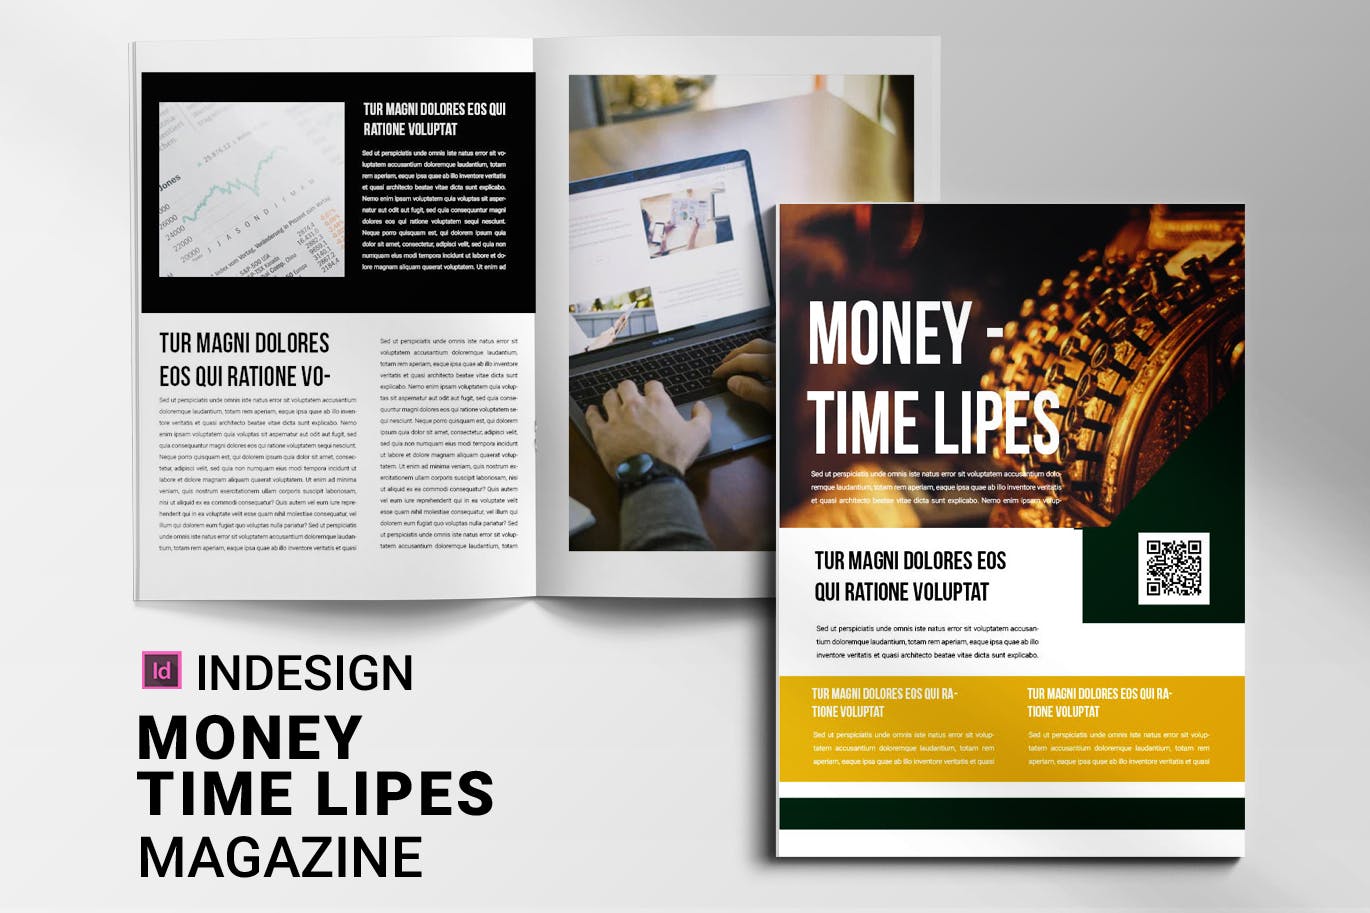 Money Time Lipes - Magazine